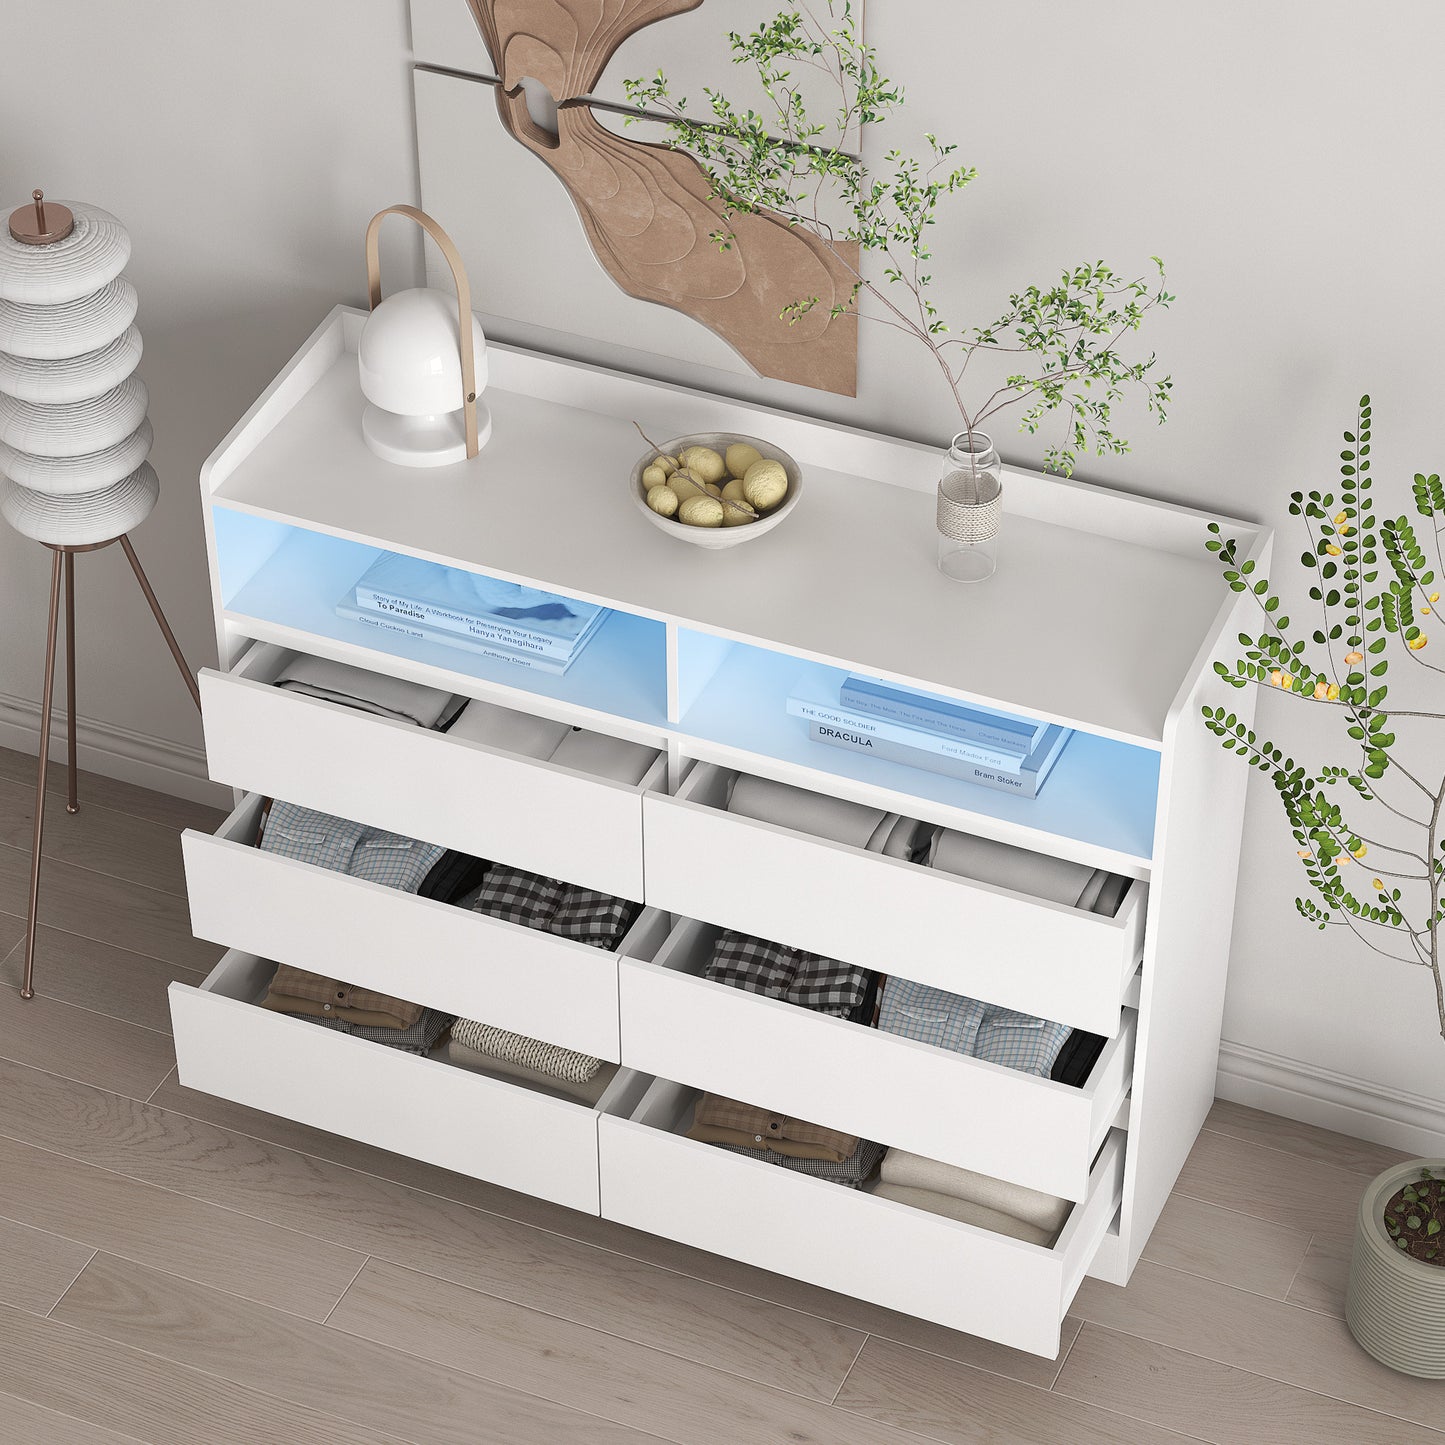 6 Drawer Dresser, White Dresser for Bedroom with LED Lights